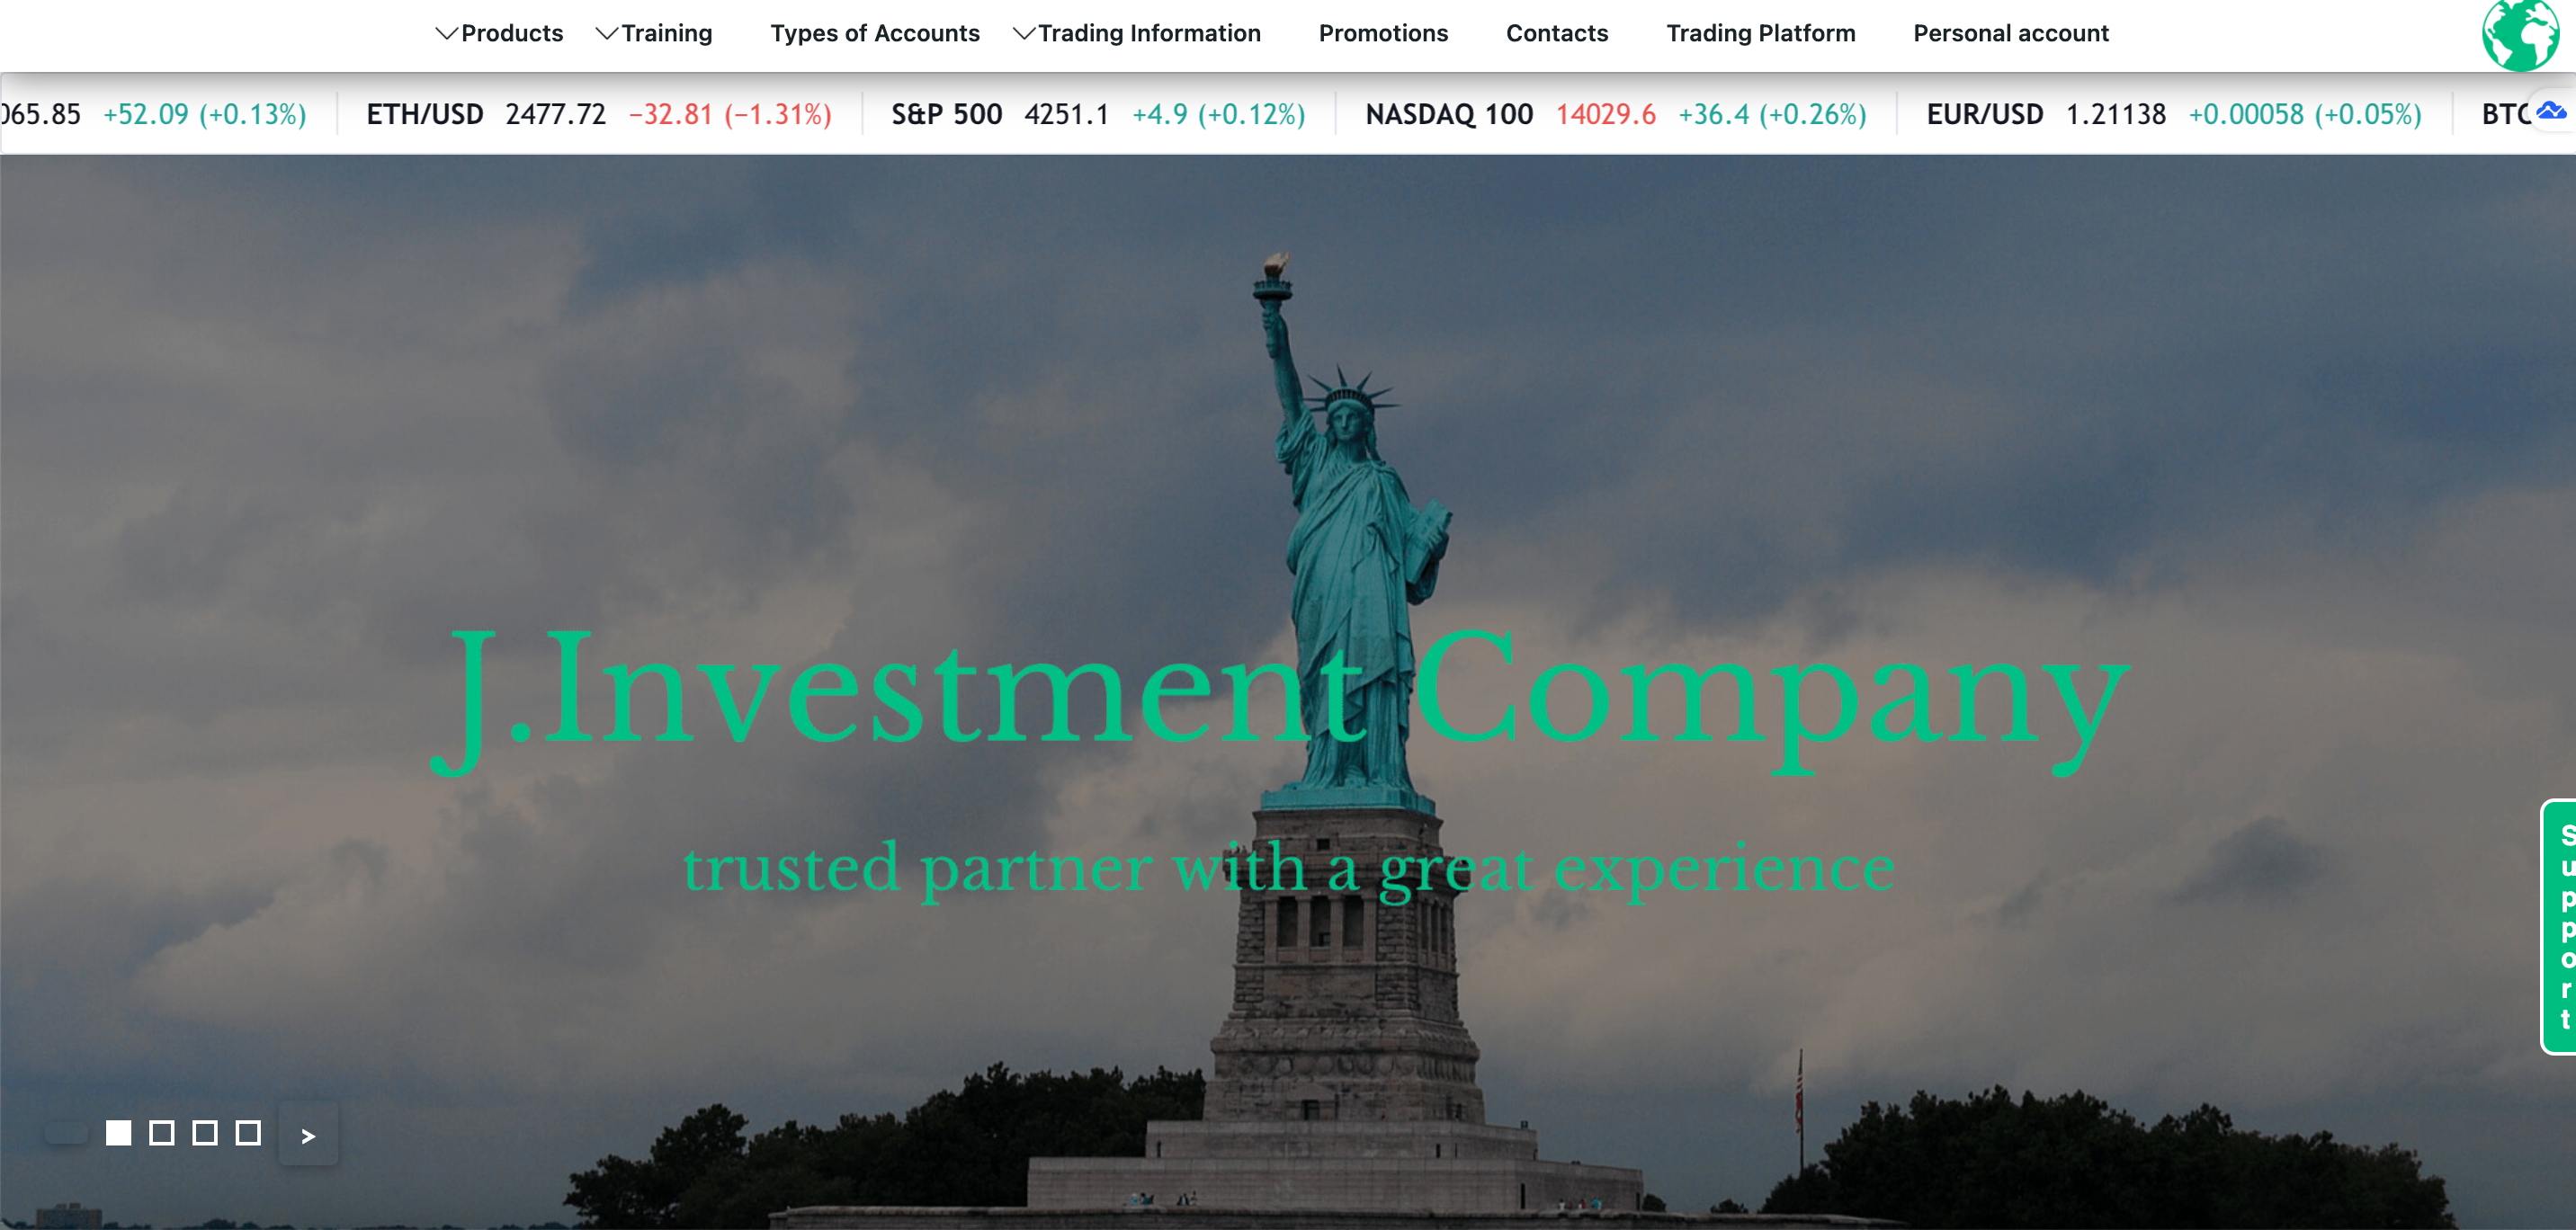 J.Investment website